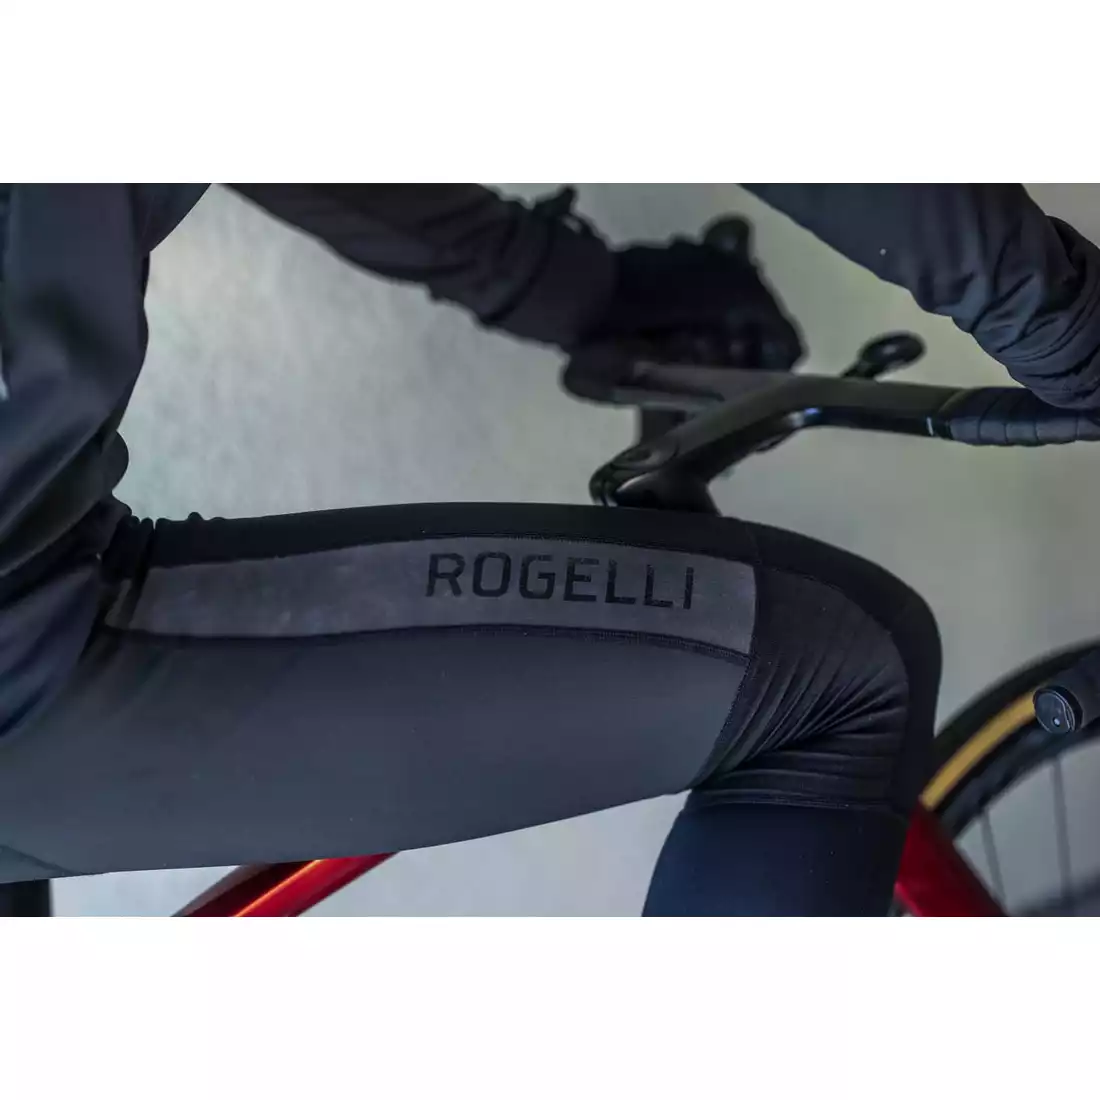 ROGELLI CORE women's winter cycling bib tights, black